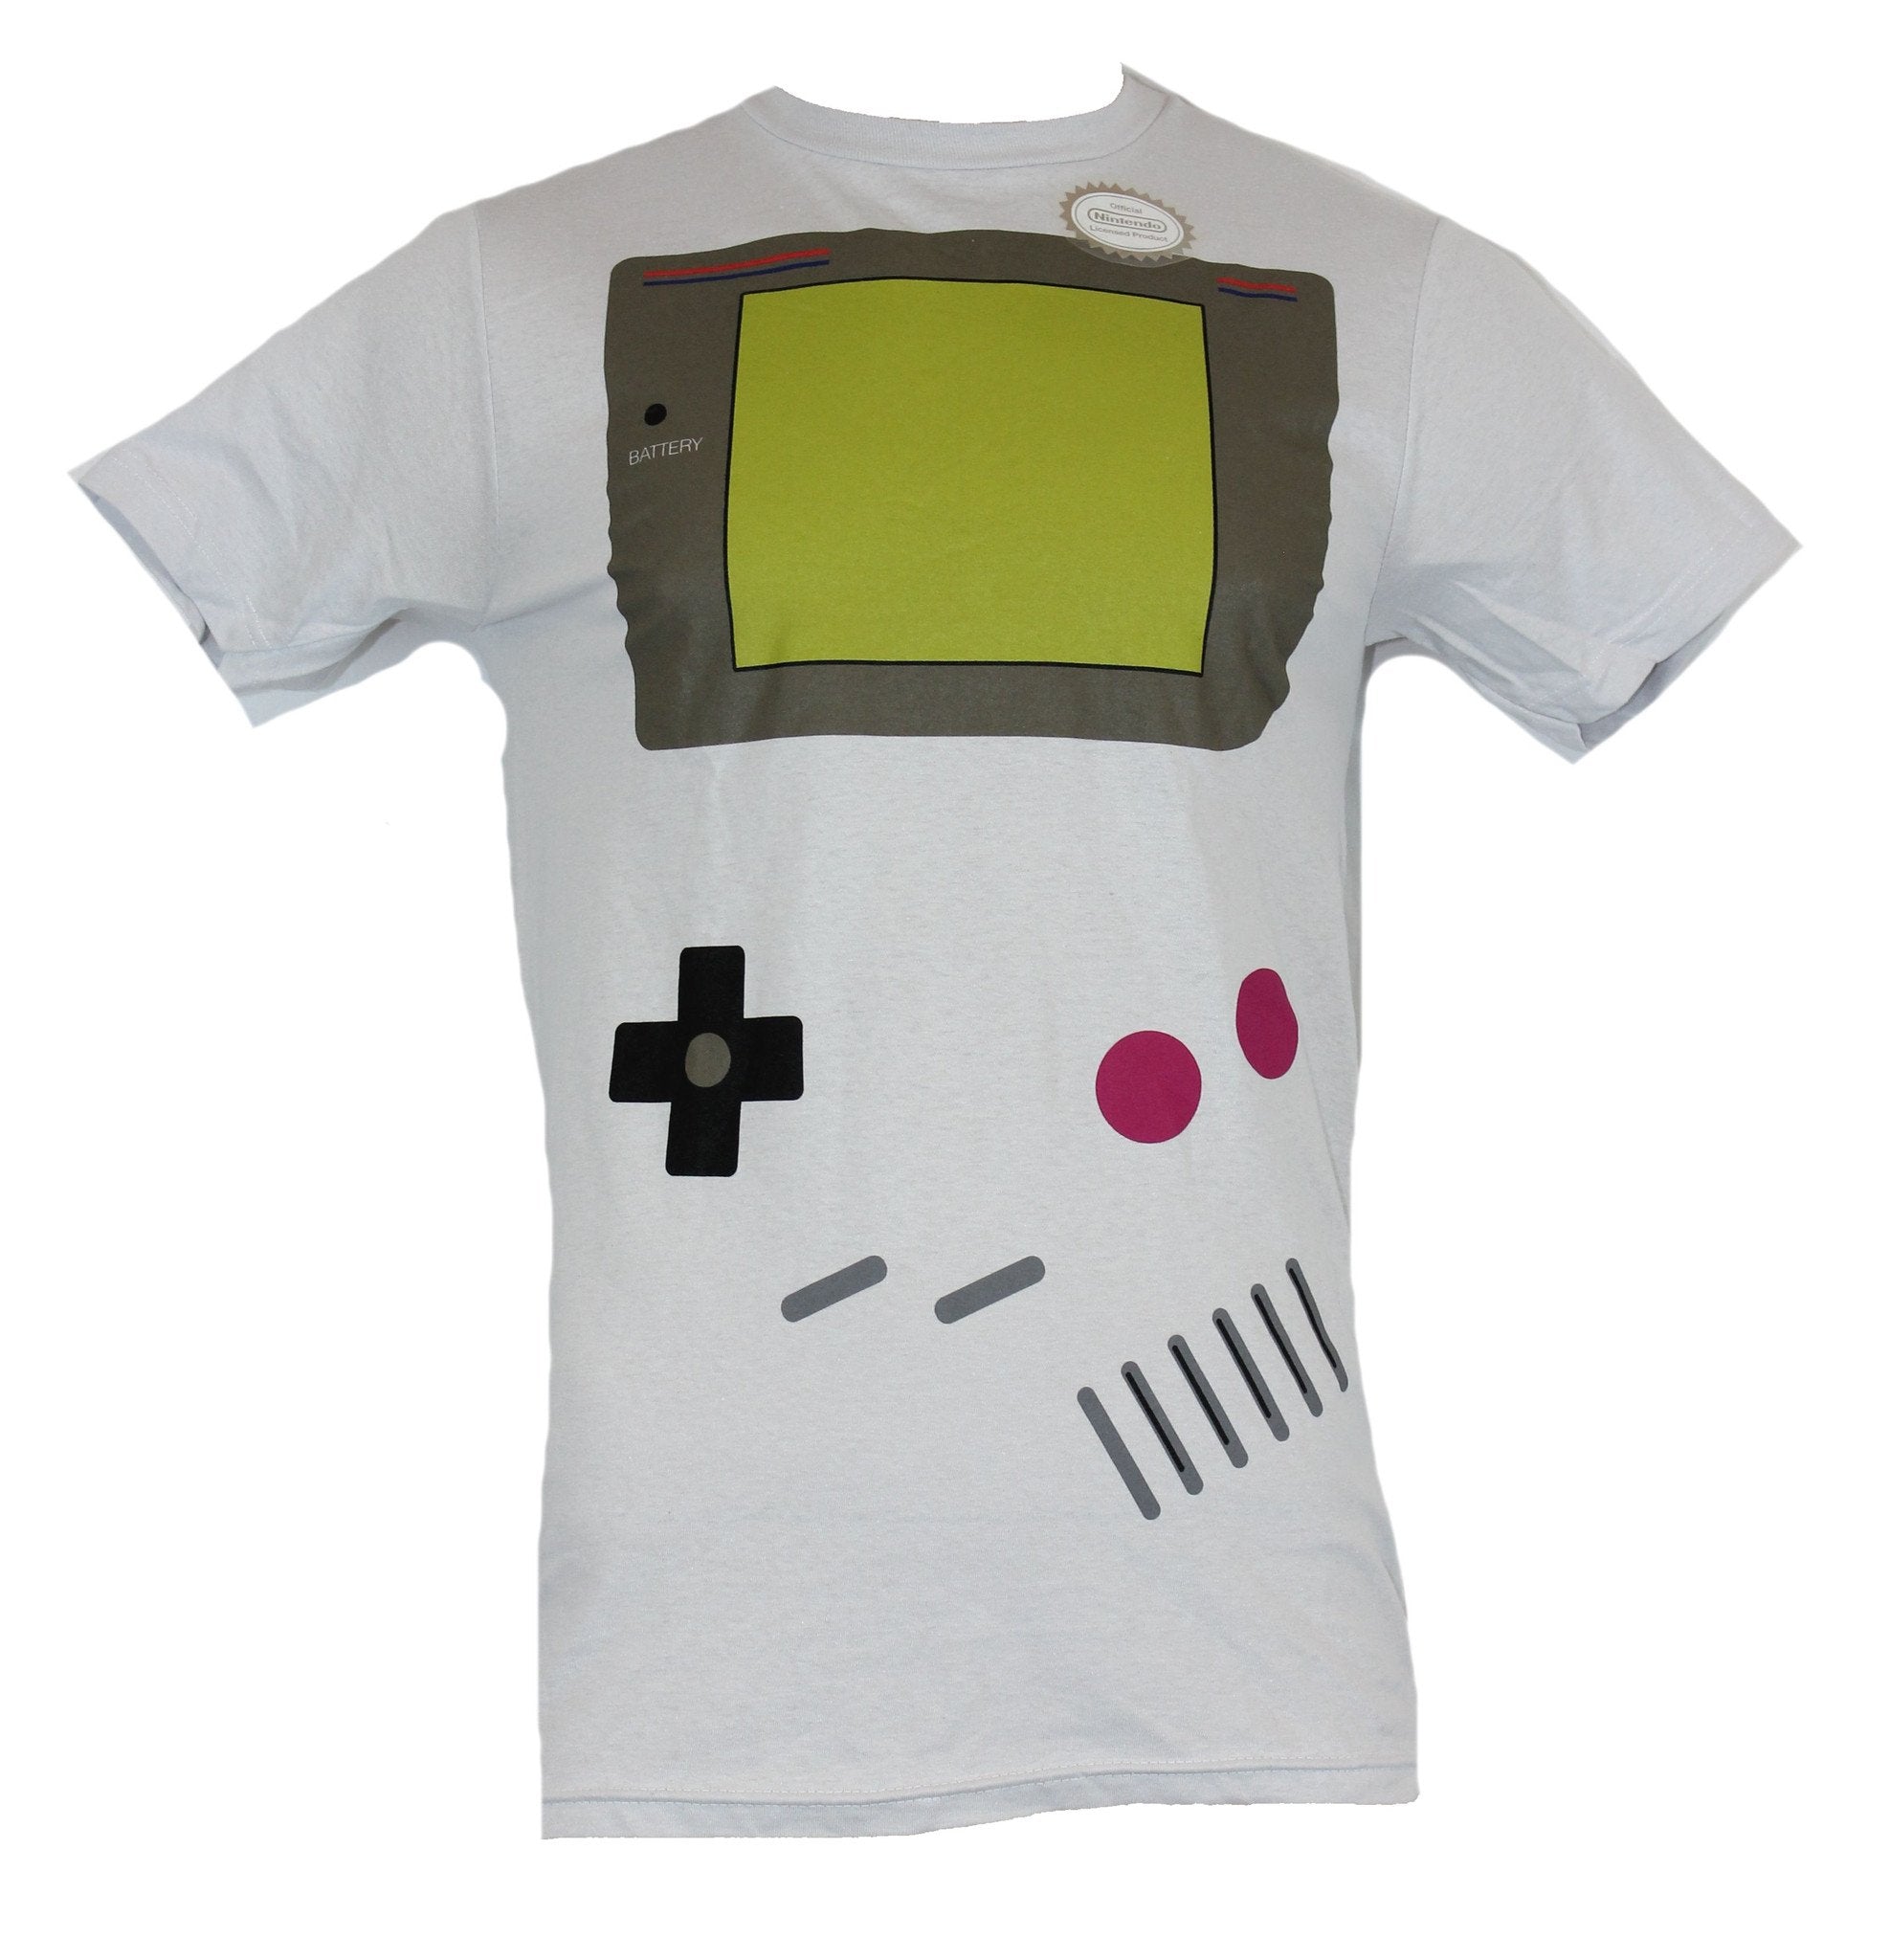 Nintendo Gameboy Mens T-Shirt - Full Shirt of Iamge of the Classic Handheld